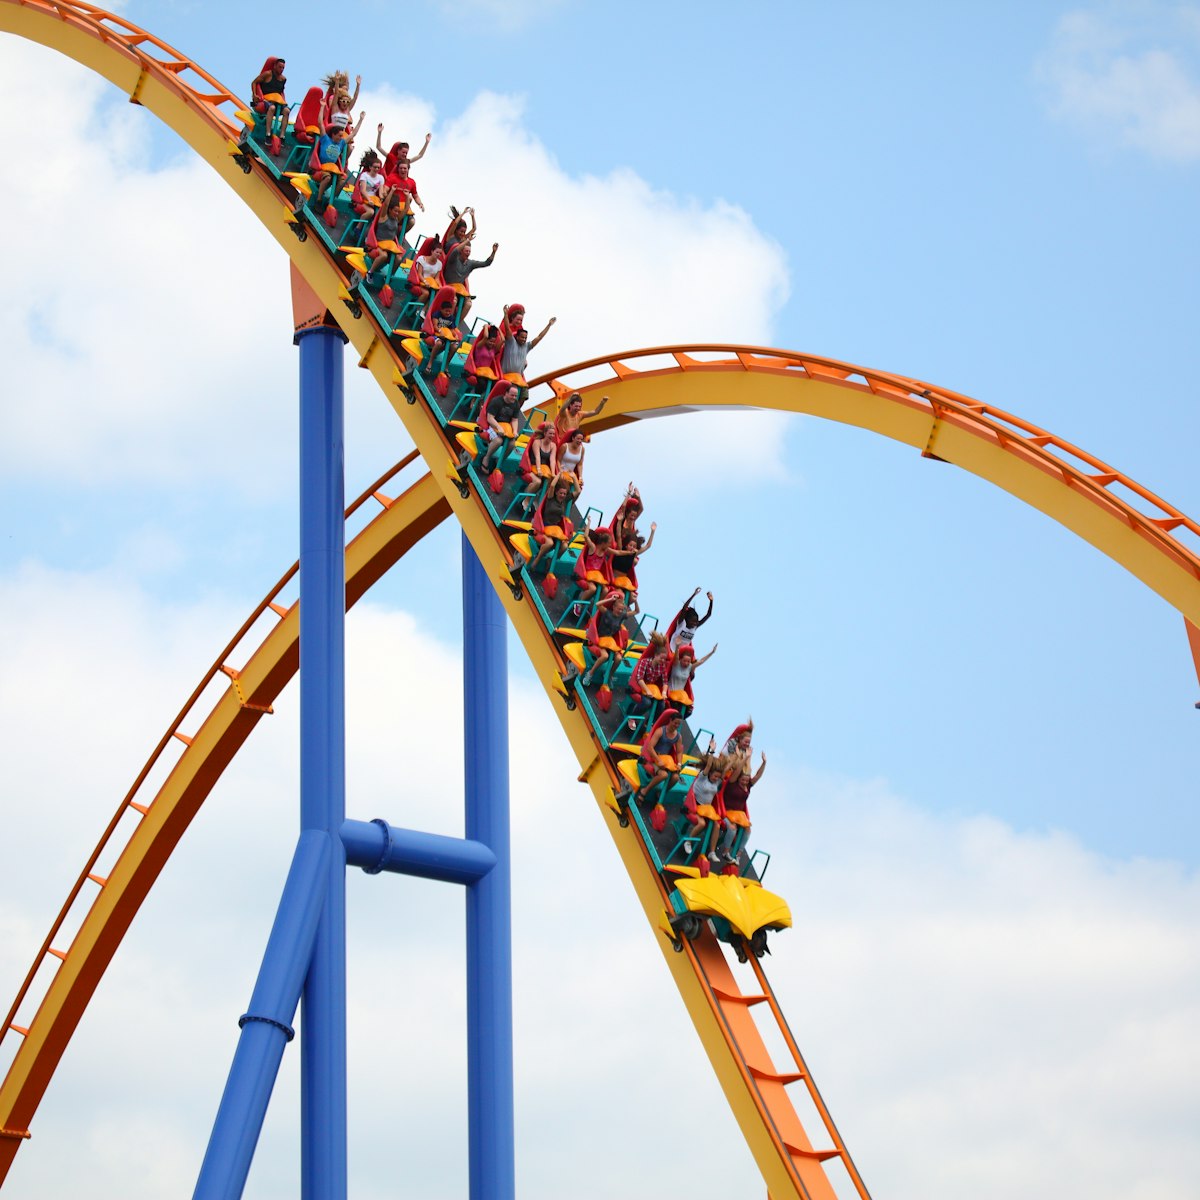 July 11, 2015: People riding the Behemoth Roller Coaster at Canada's Wonderland amusement park.